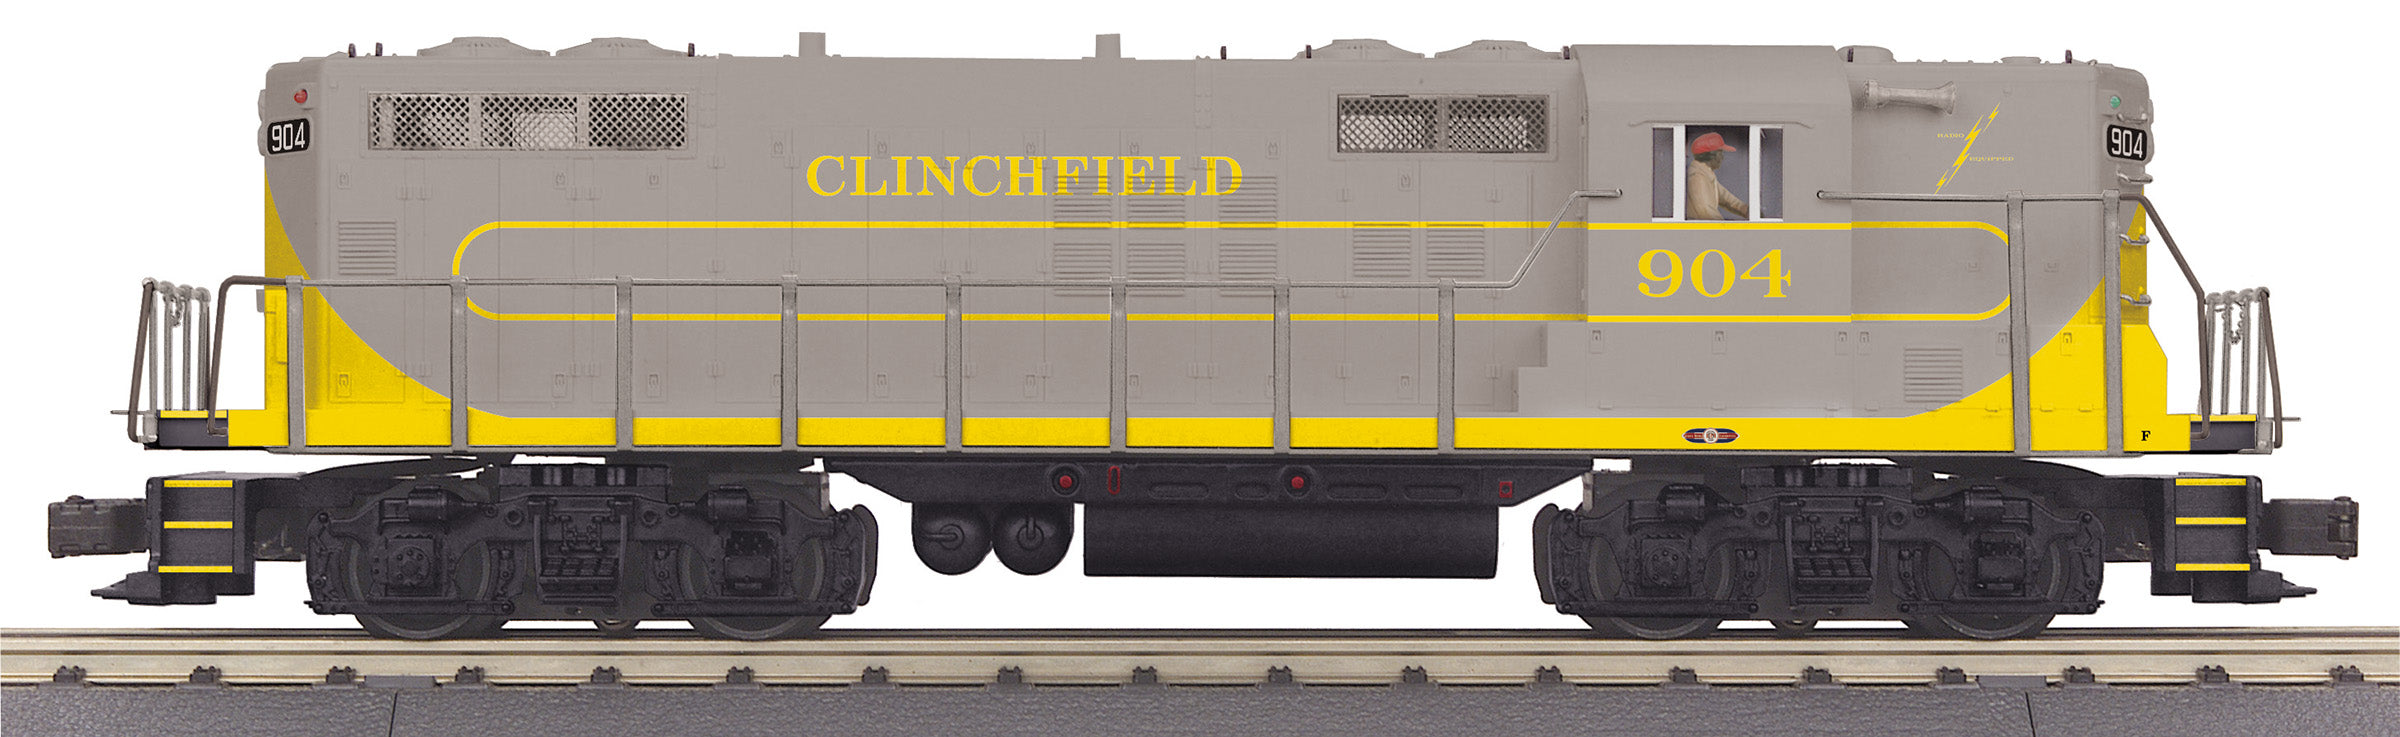 MTH 20-21537-1 - GP-7 Diesel Engine "Clinchfield" w/ PS3 #904 - Custom Run for MrMuffin'sTrains